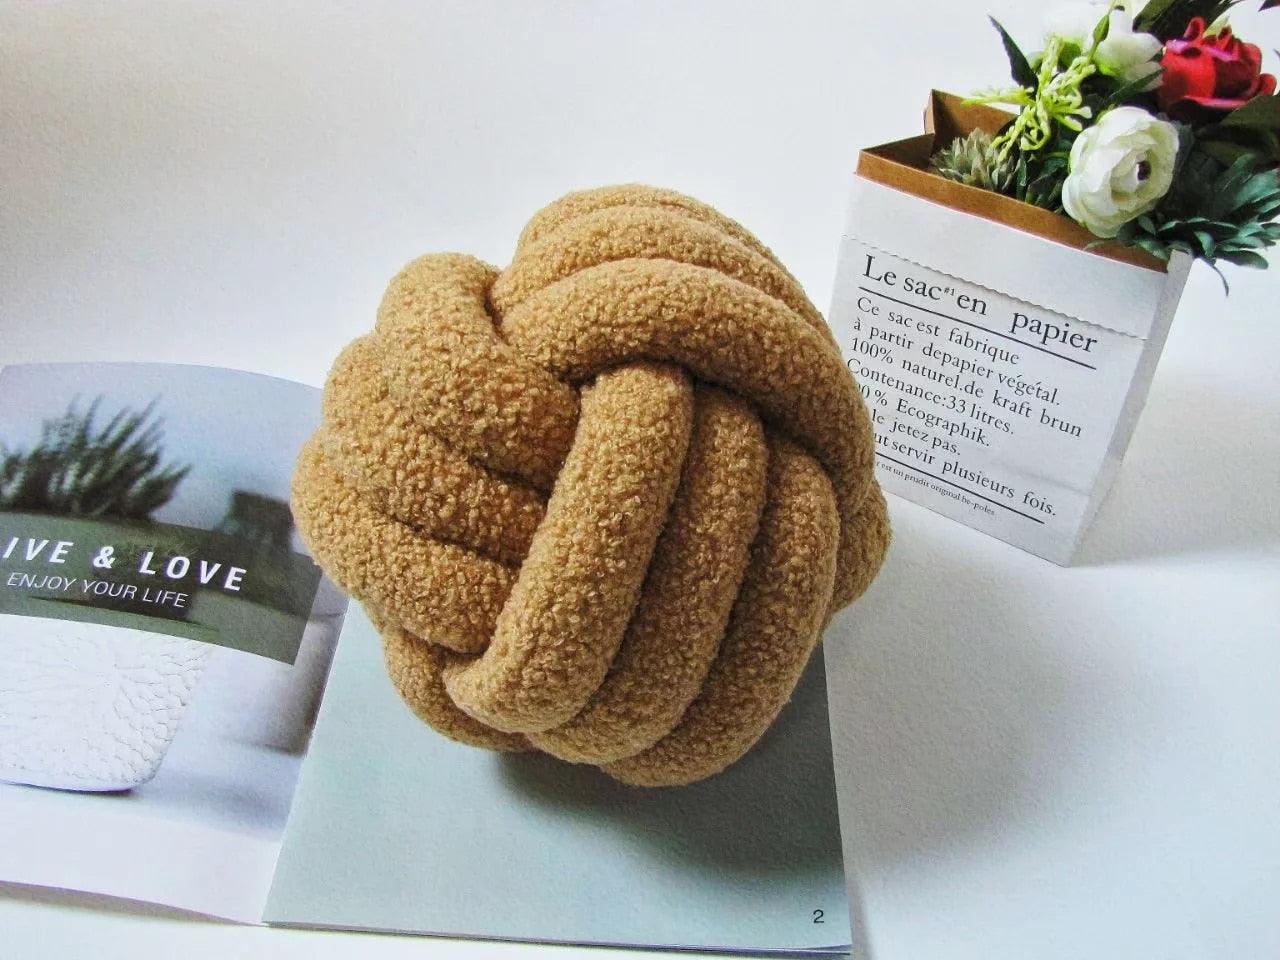 Triple Knot Cotton Fleece Pillow